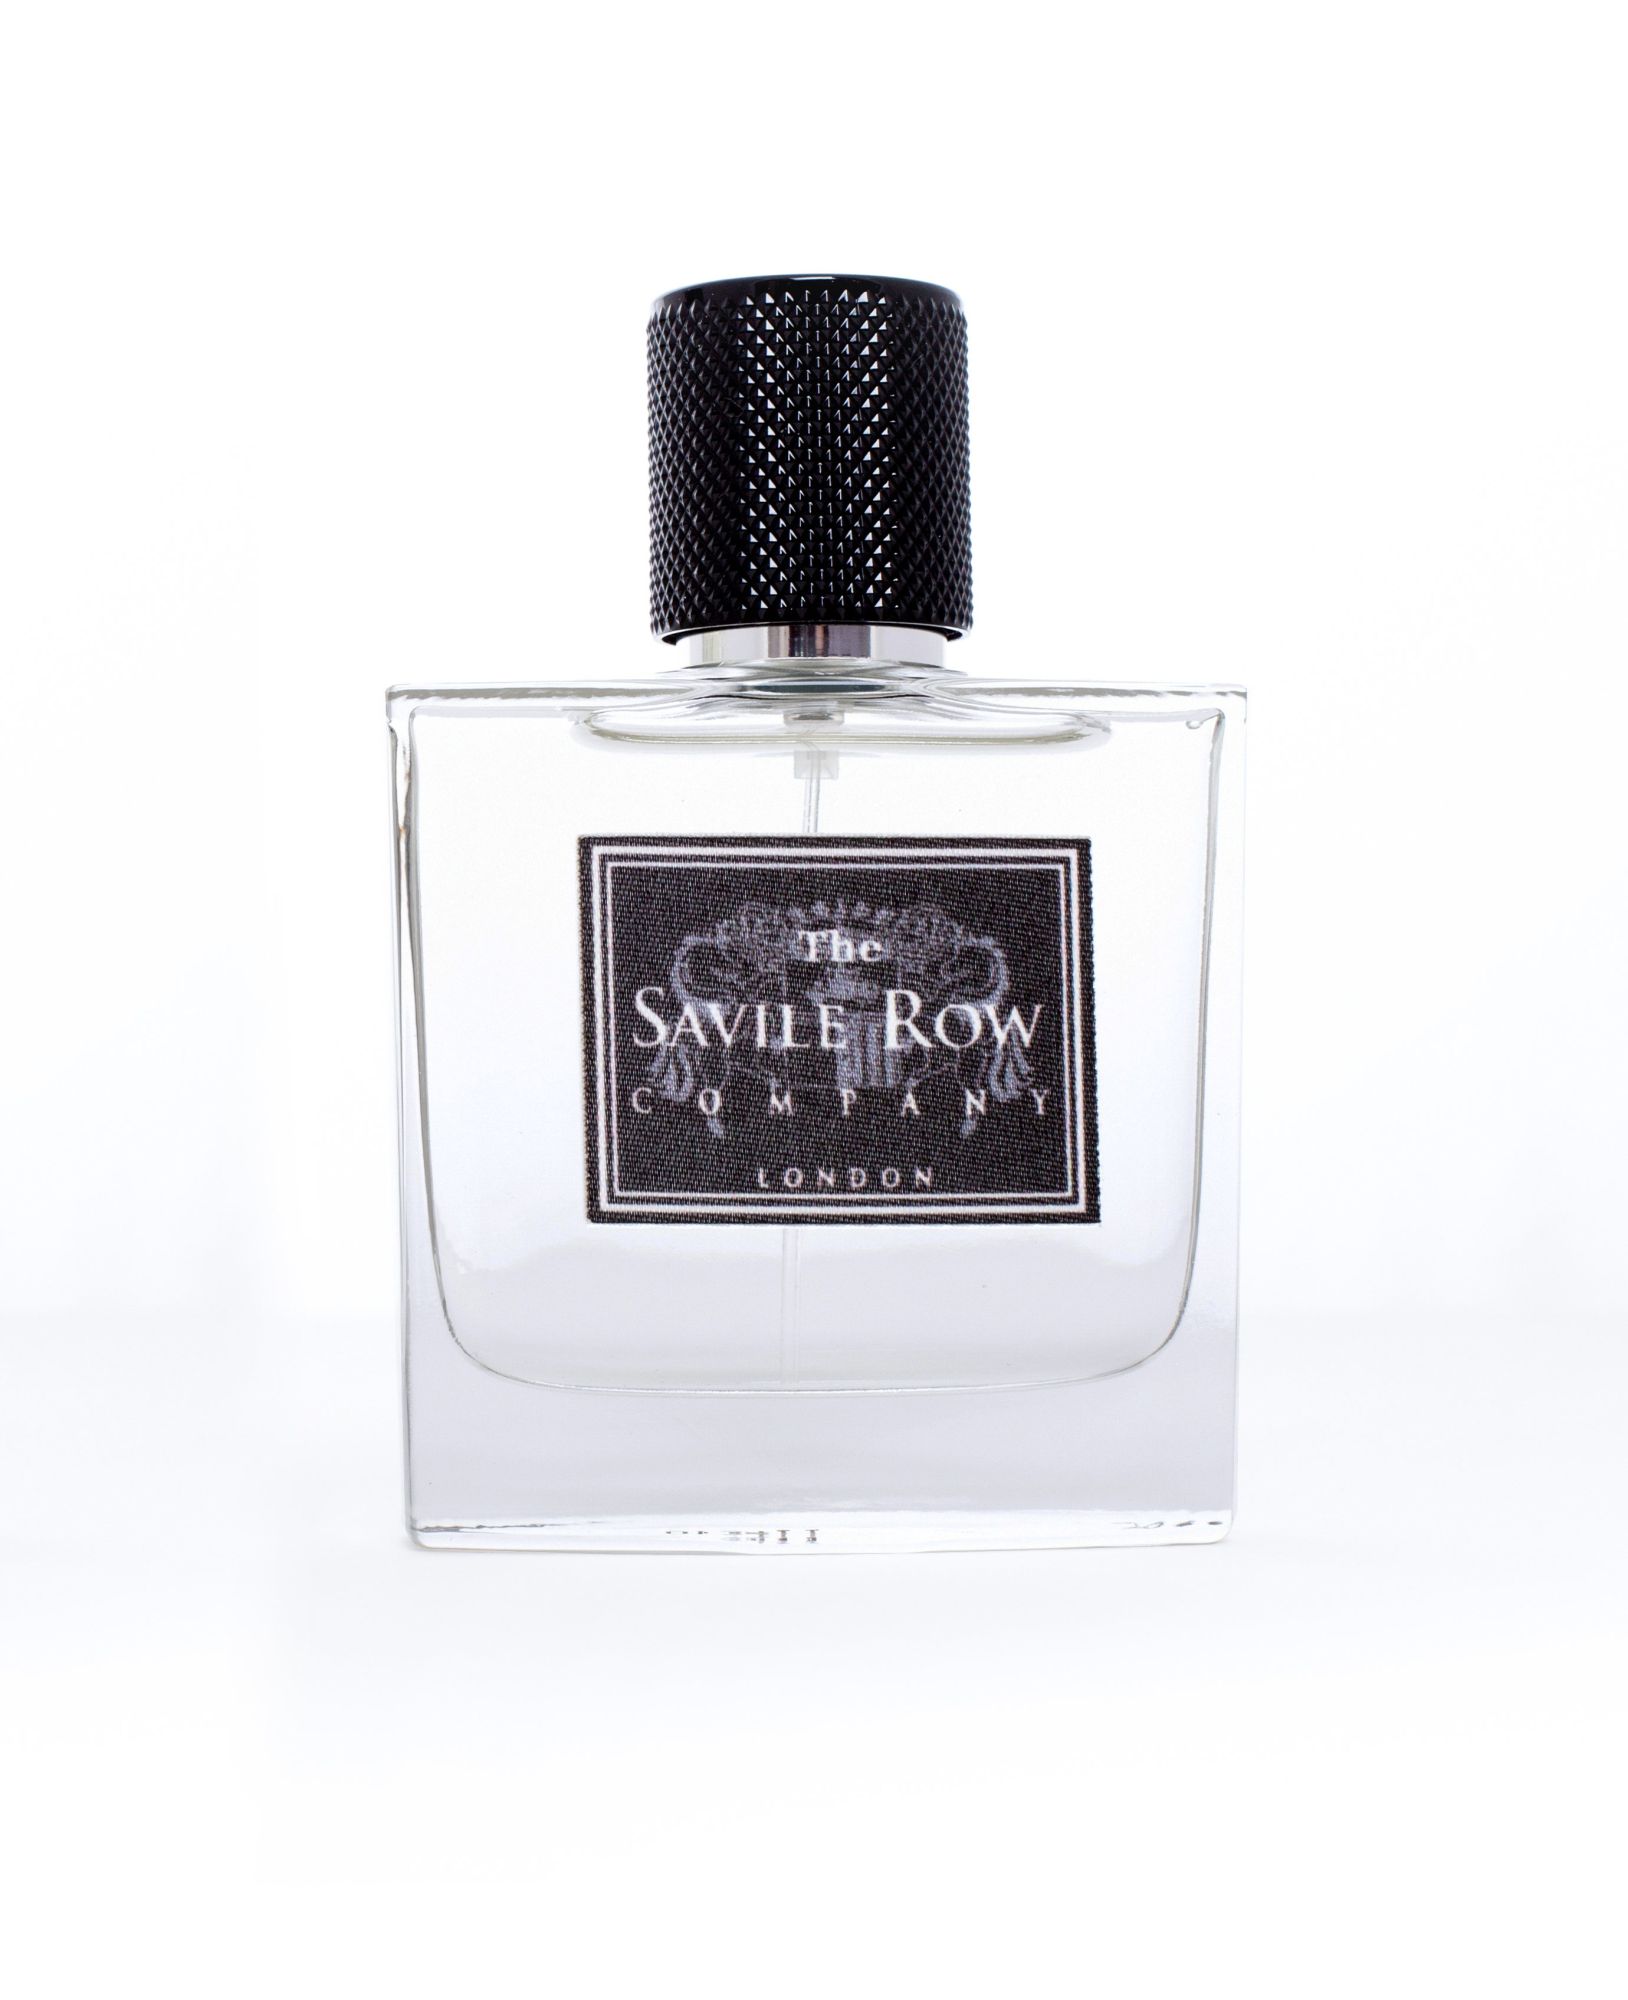 The Savile Row Company Eau De Toilette Fragrance 50ml